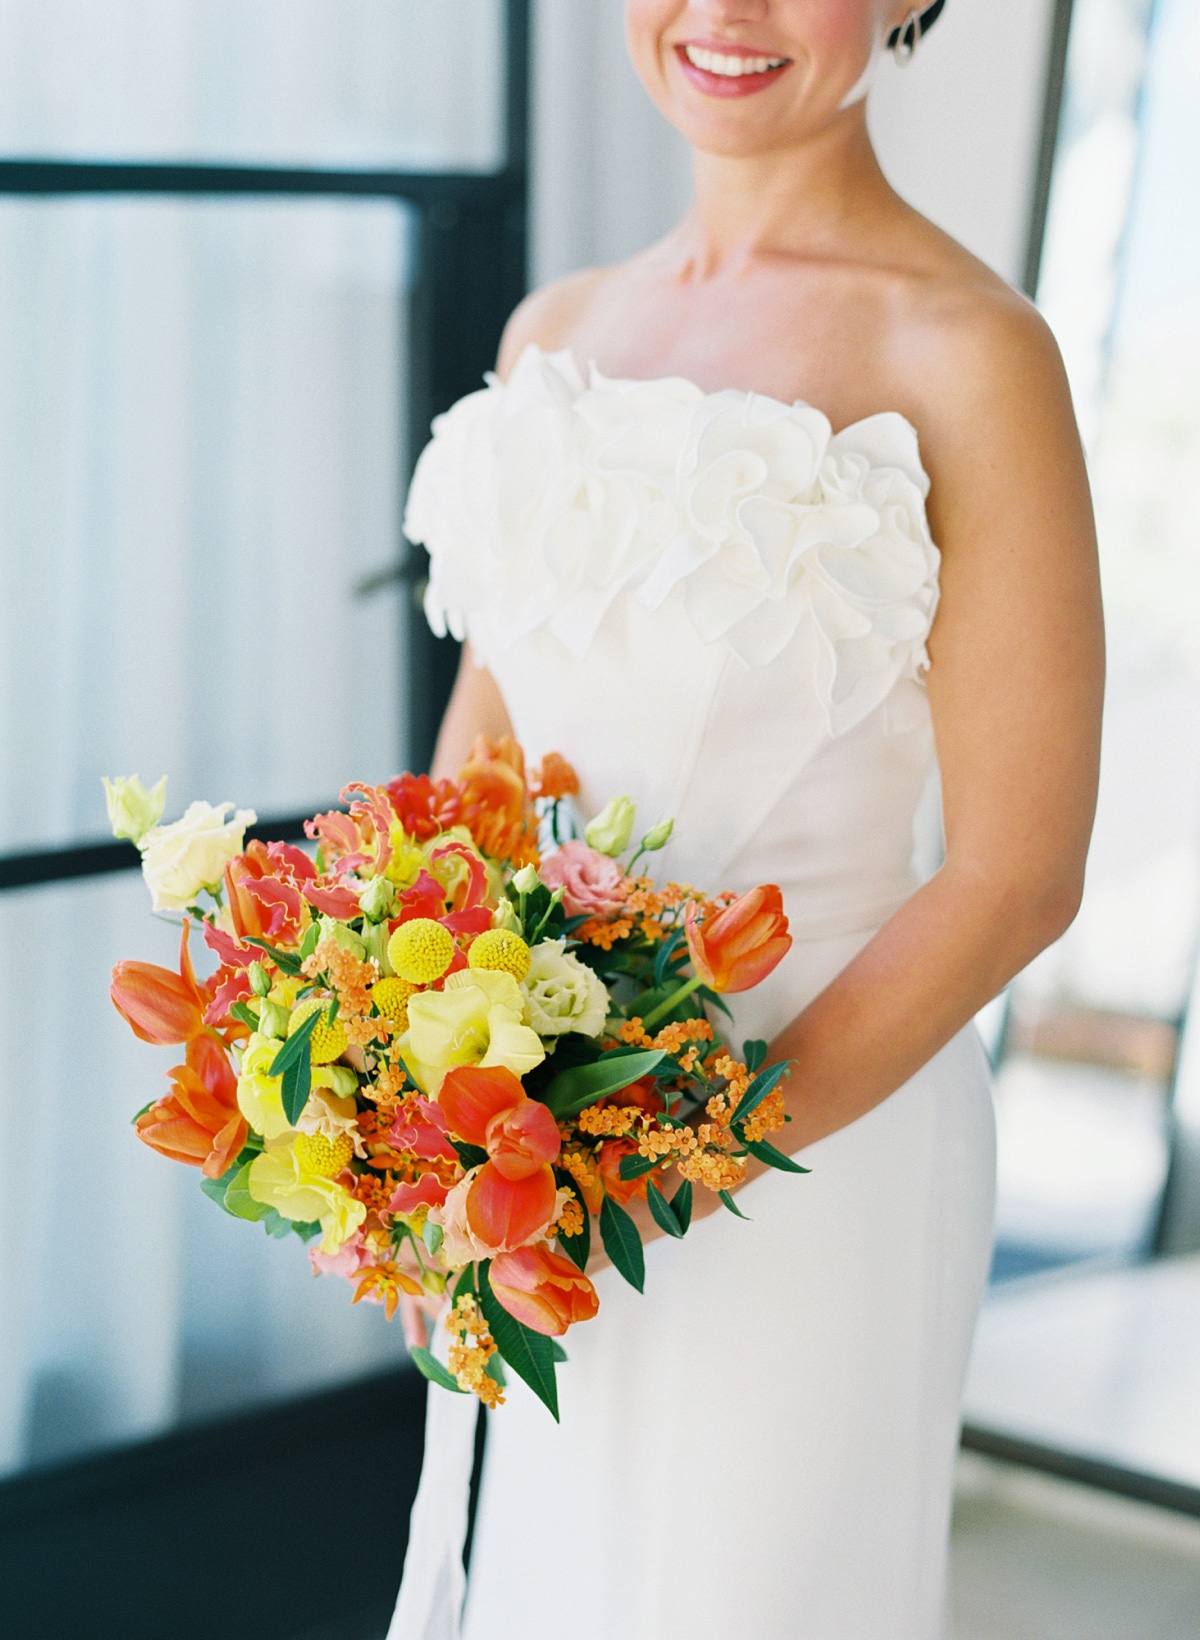 WEP wedding flowers - Wedding Planner Provence